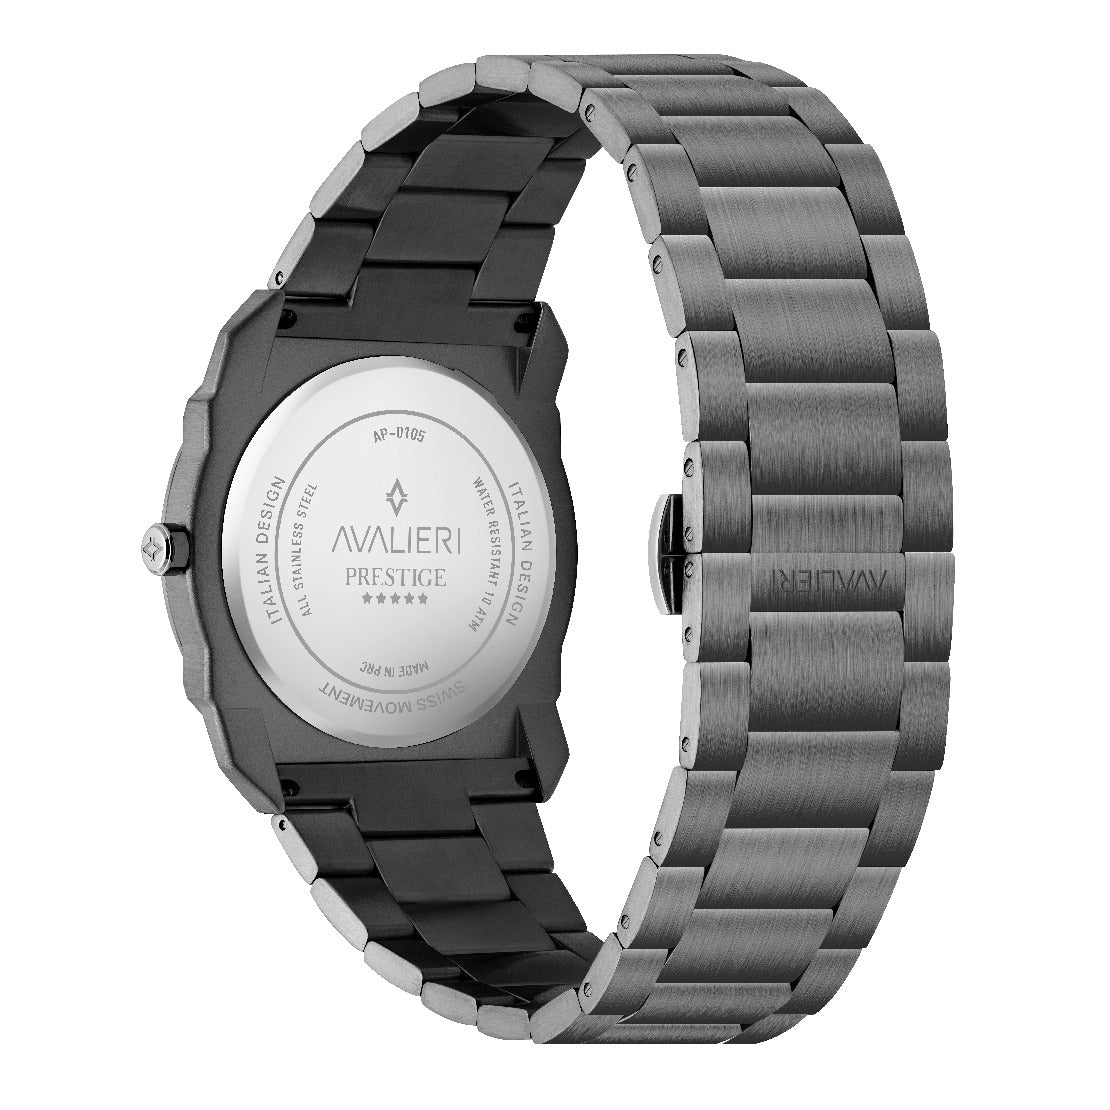 Avalieri Prestige Men's Watch, Swiss Quartz Movement, Gray Dial - AP-0105